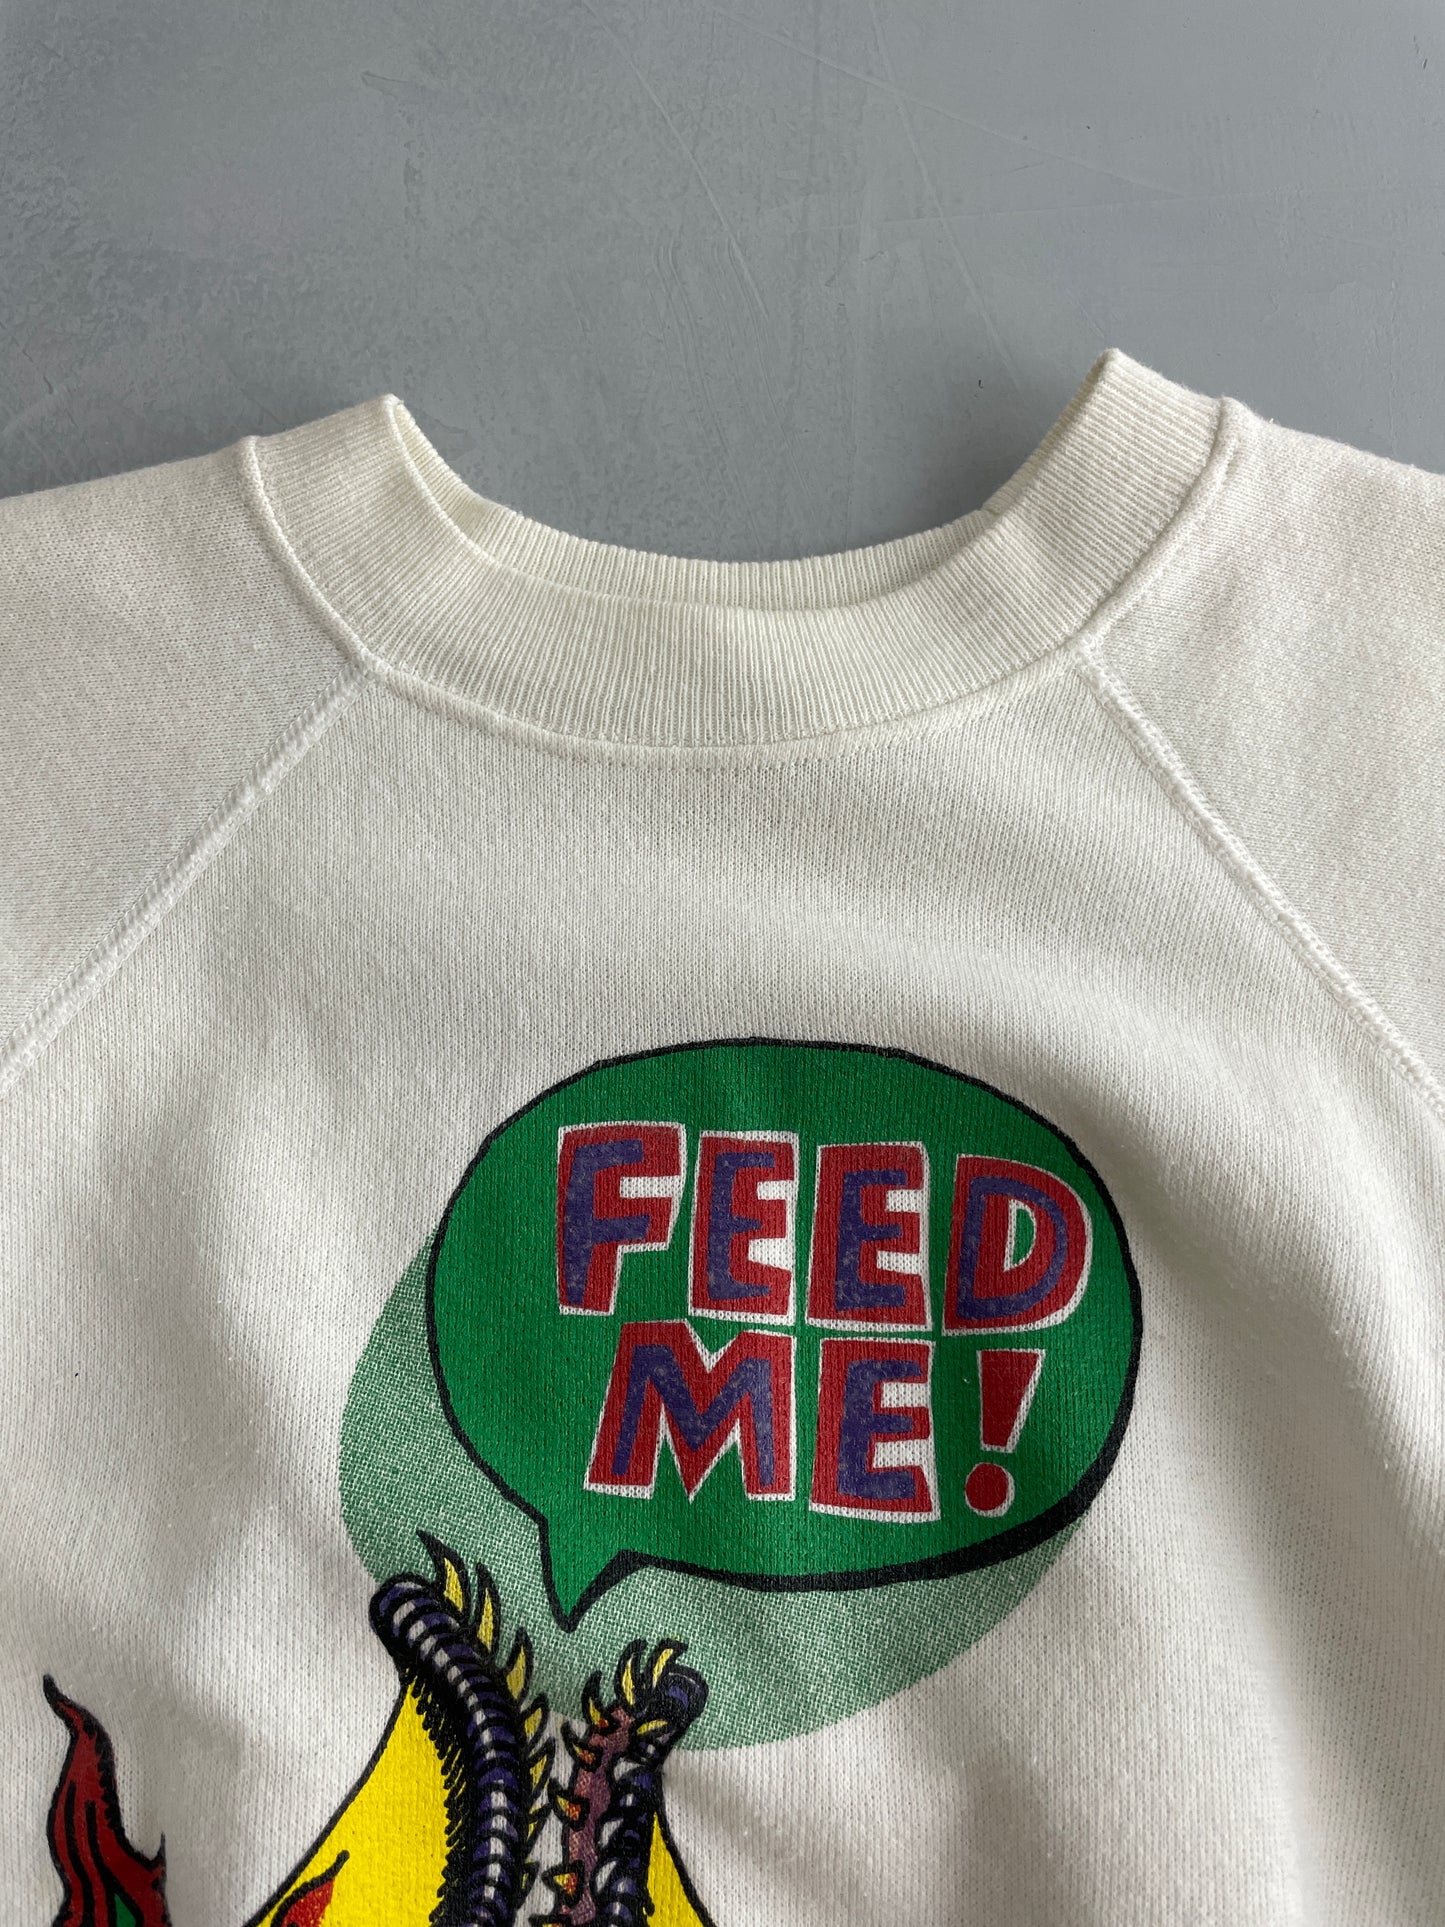 80's Little Shop Of Horrors Sweatshirt [XS]